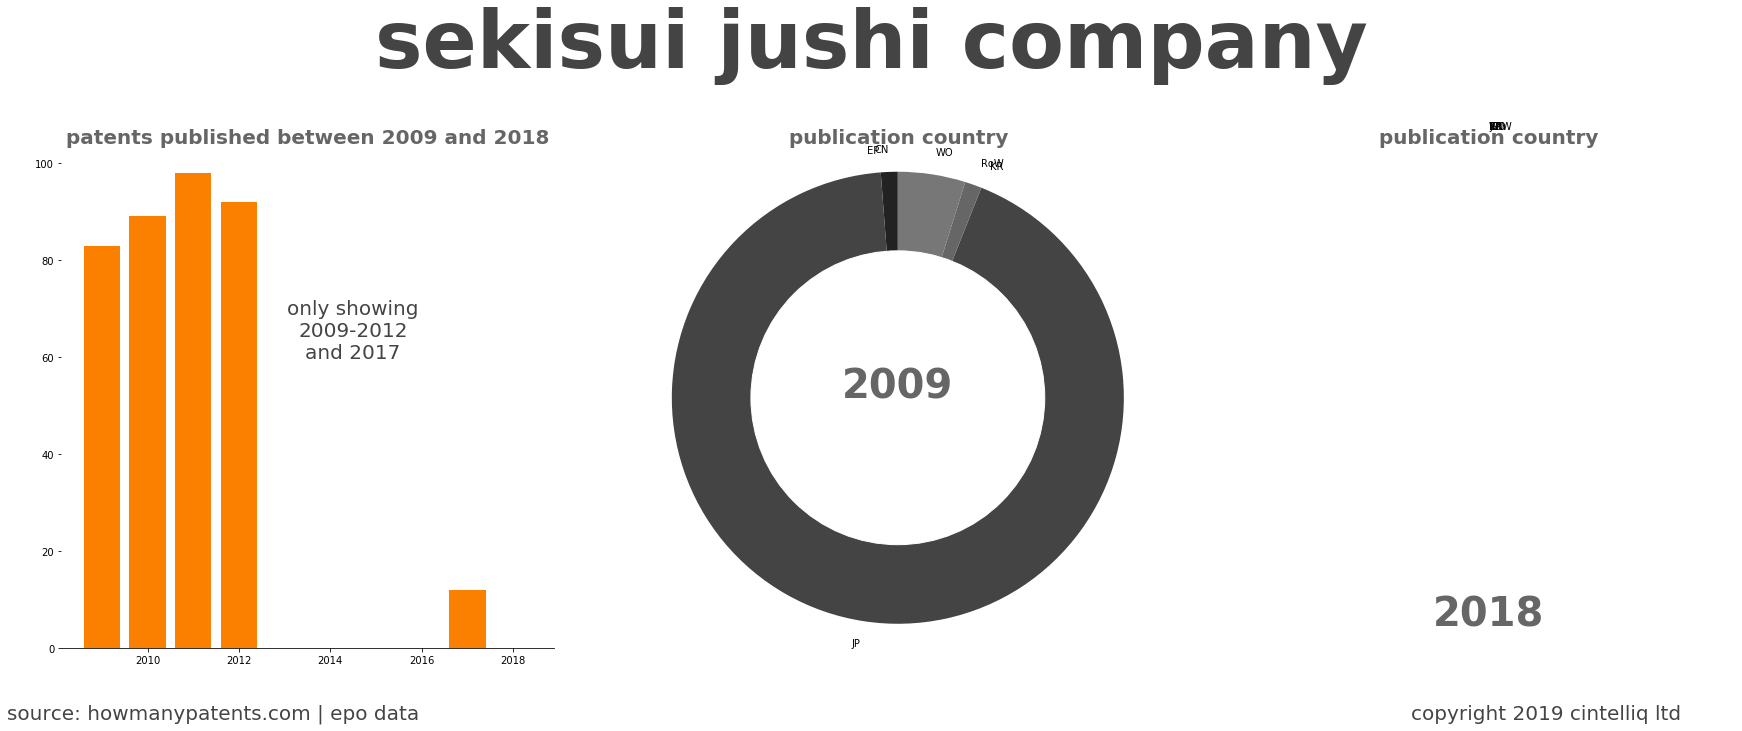 summary of patents for Sekisui Jushi Company